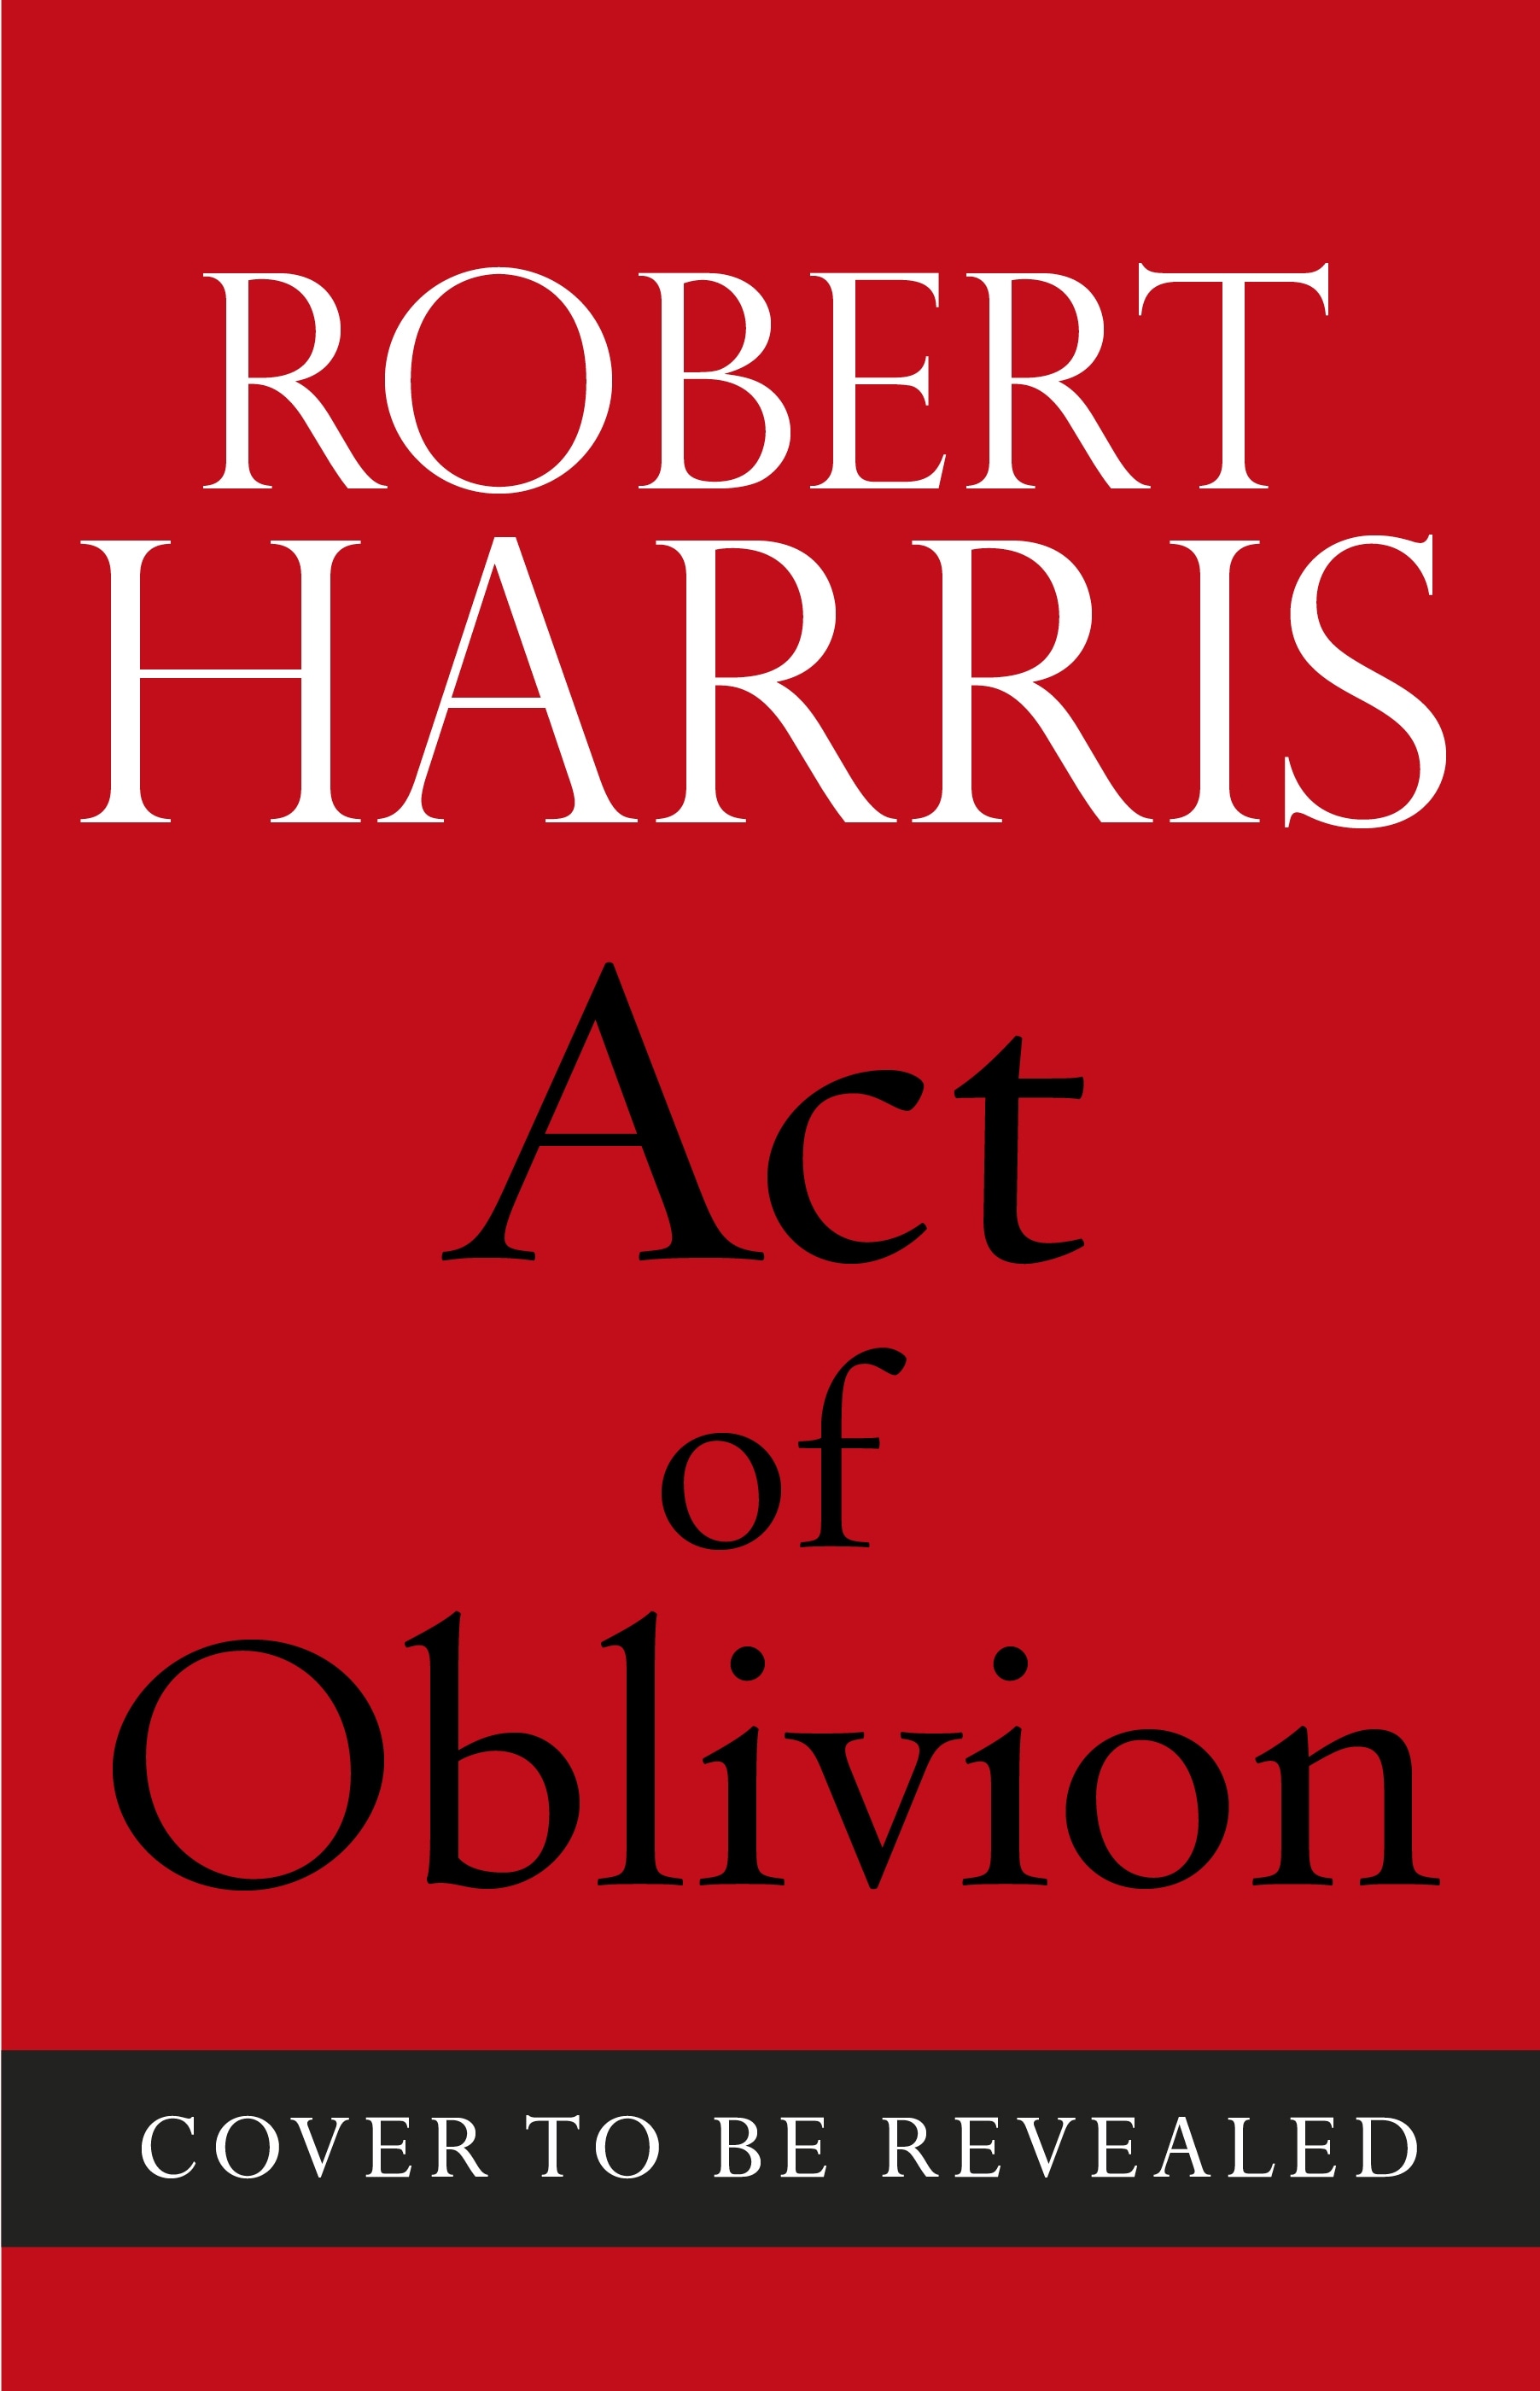 Book “Act of Oblivion” by Robert Harris — September 1, 2022